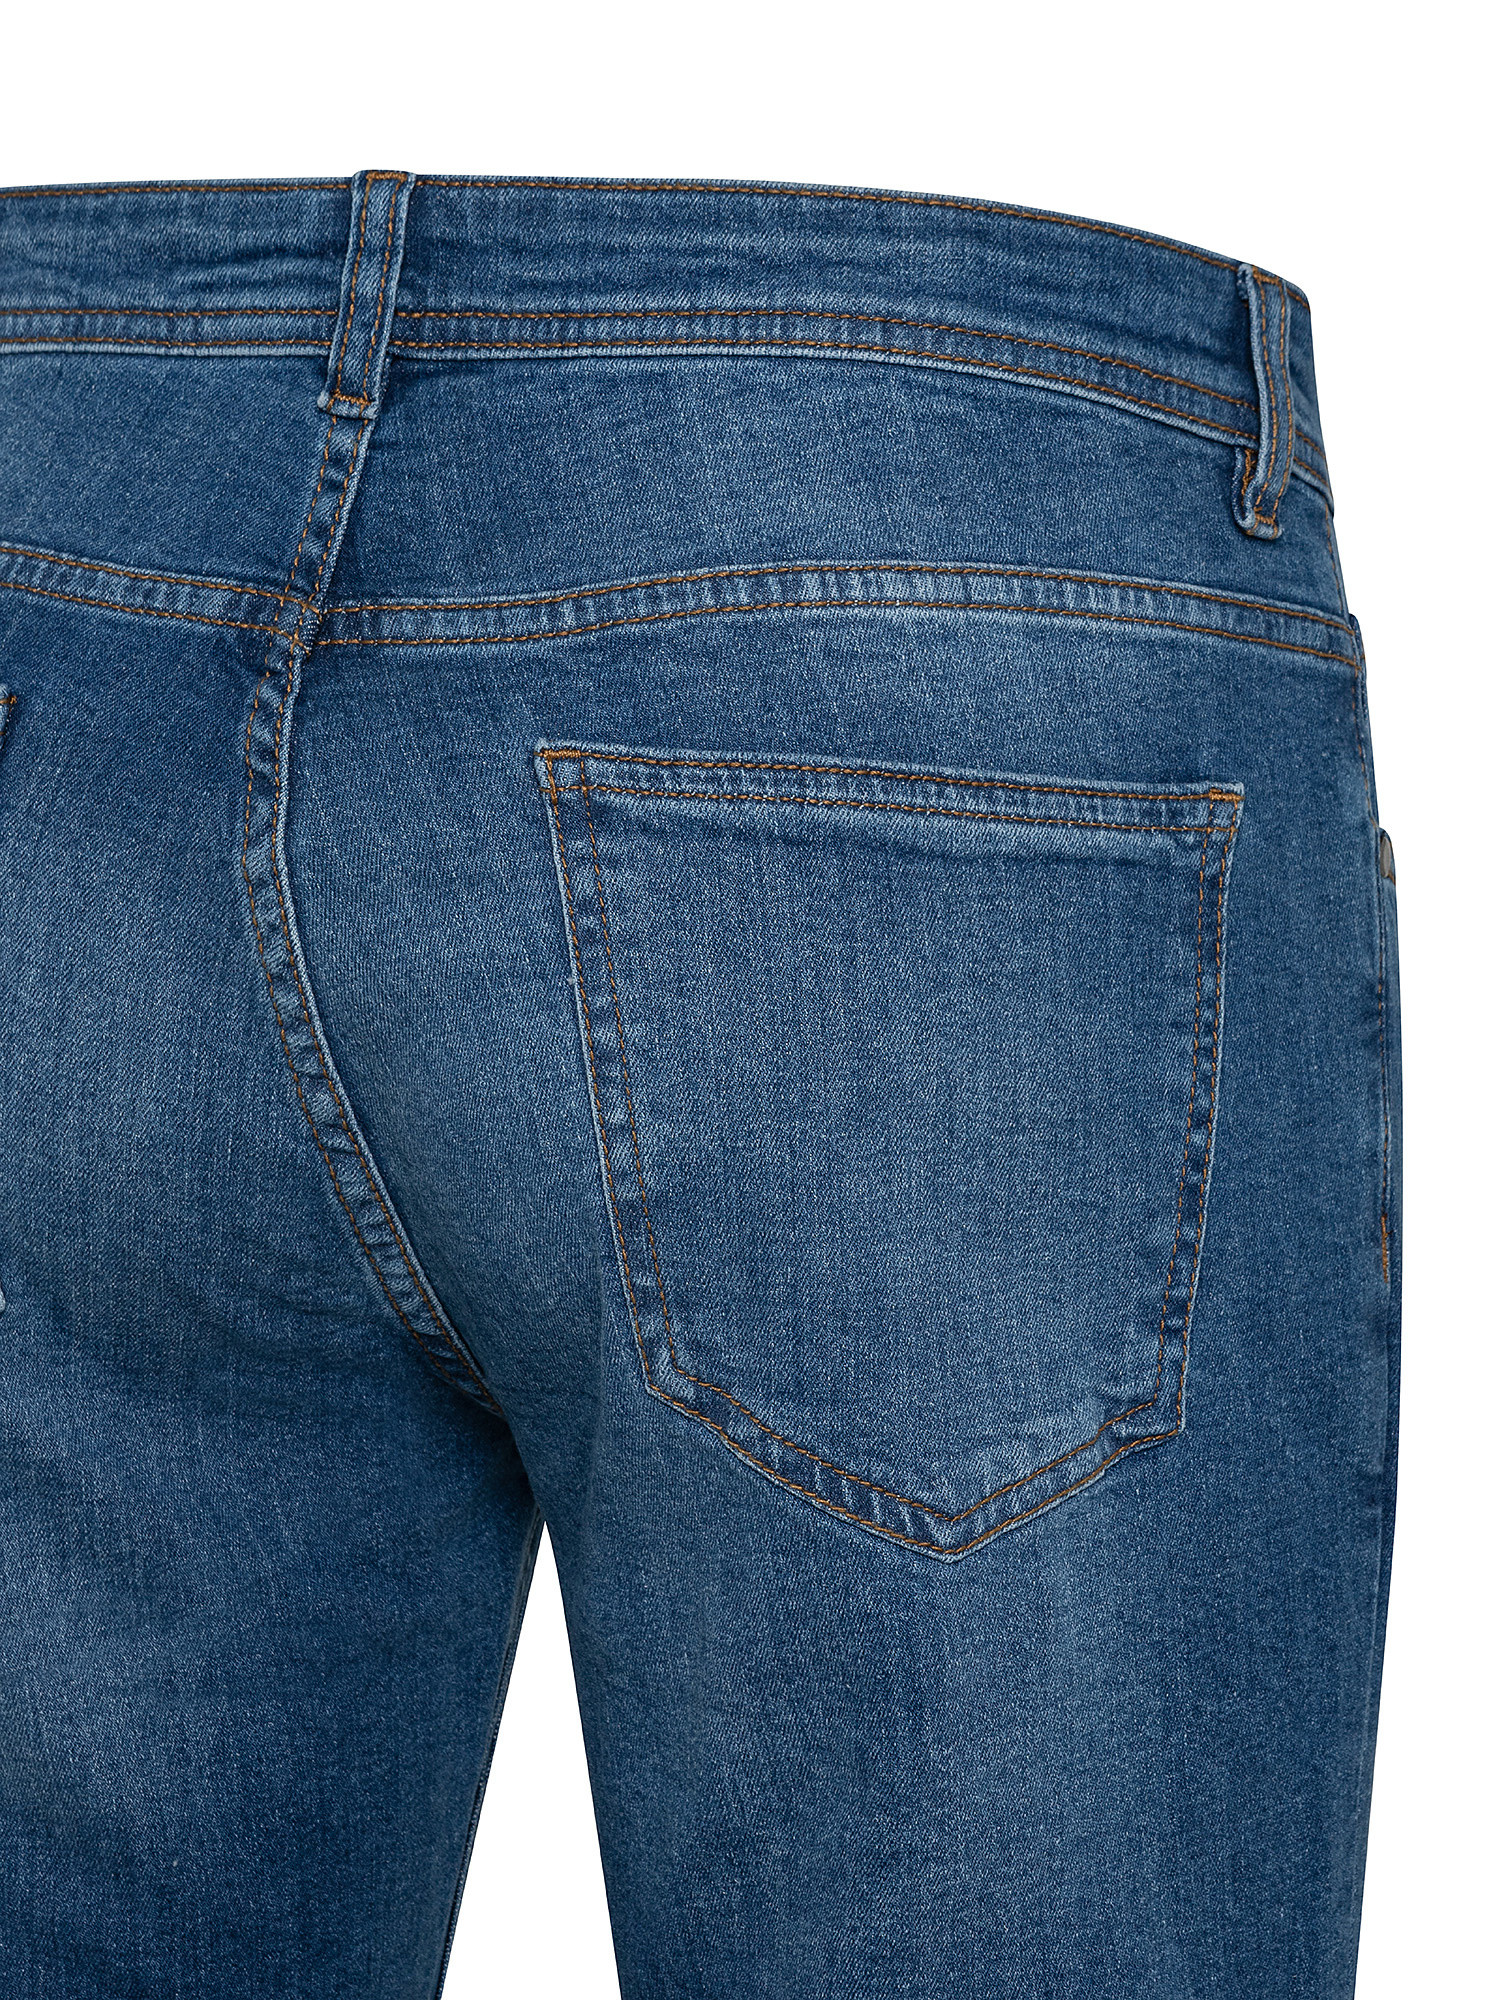 Jeans 5 tasche slim cotone stretch, Blu, large image number 2